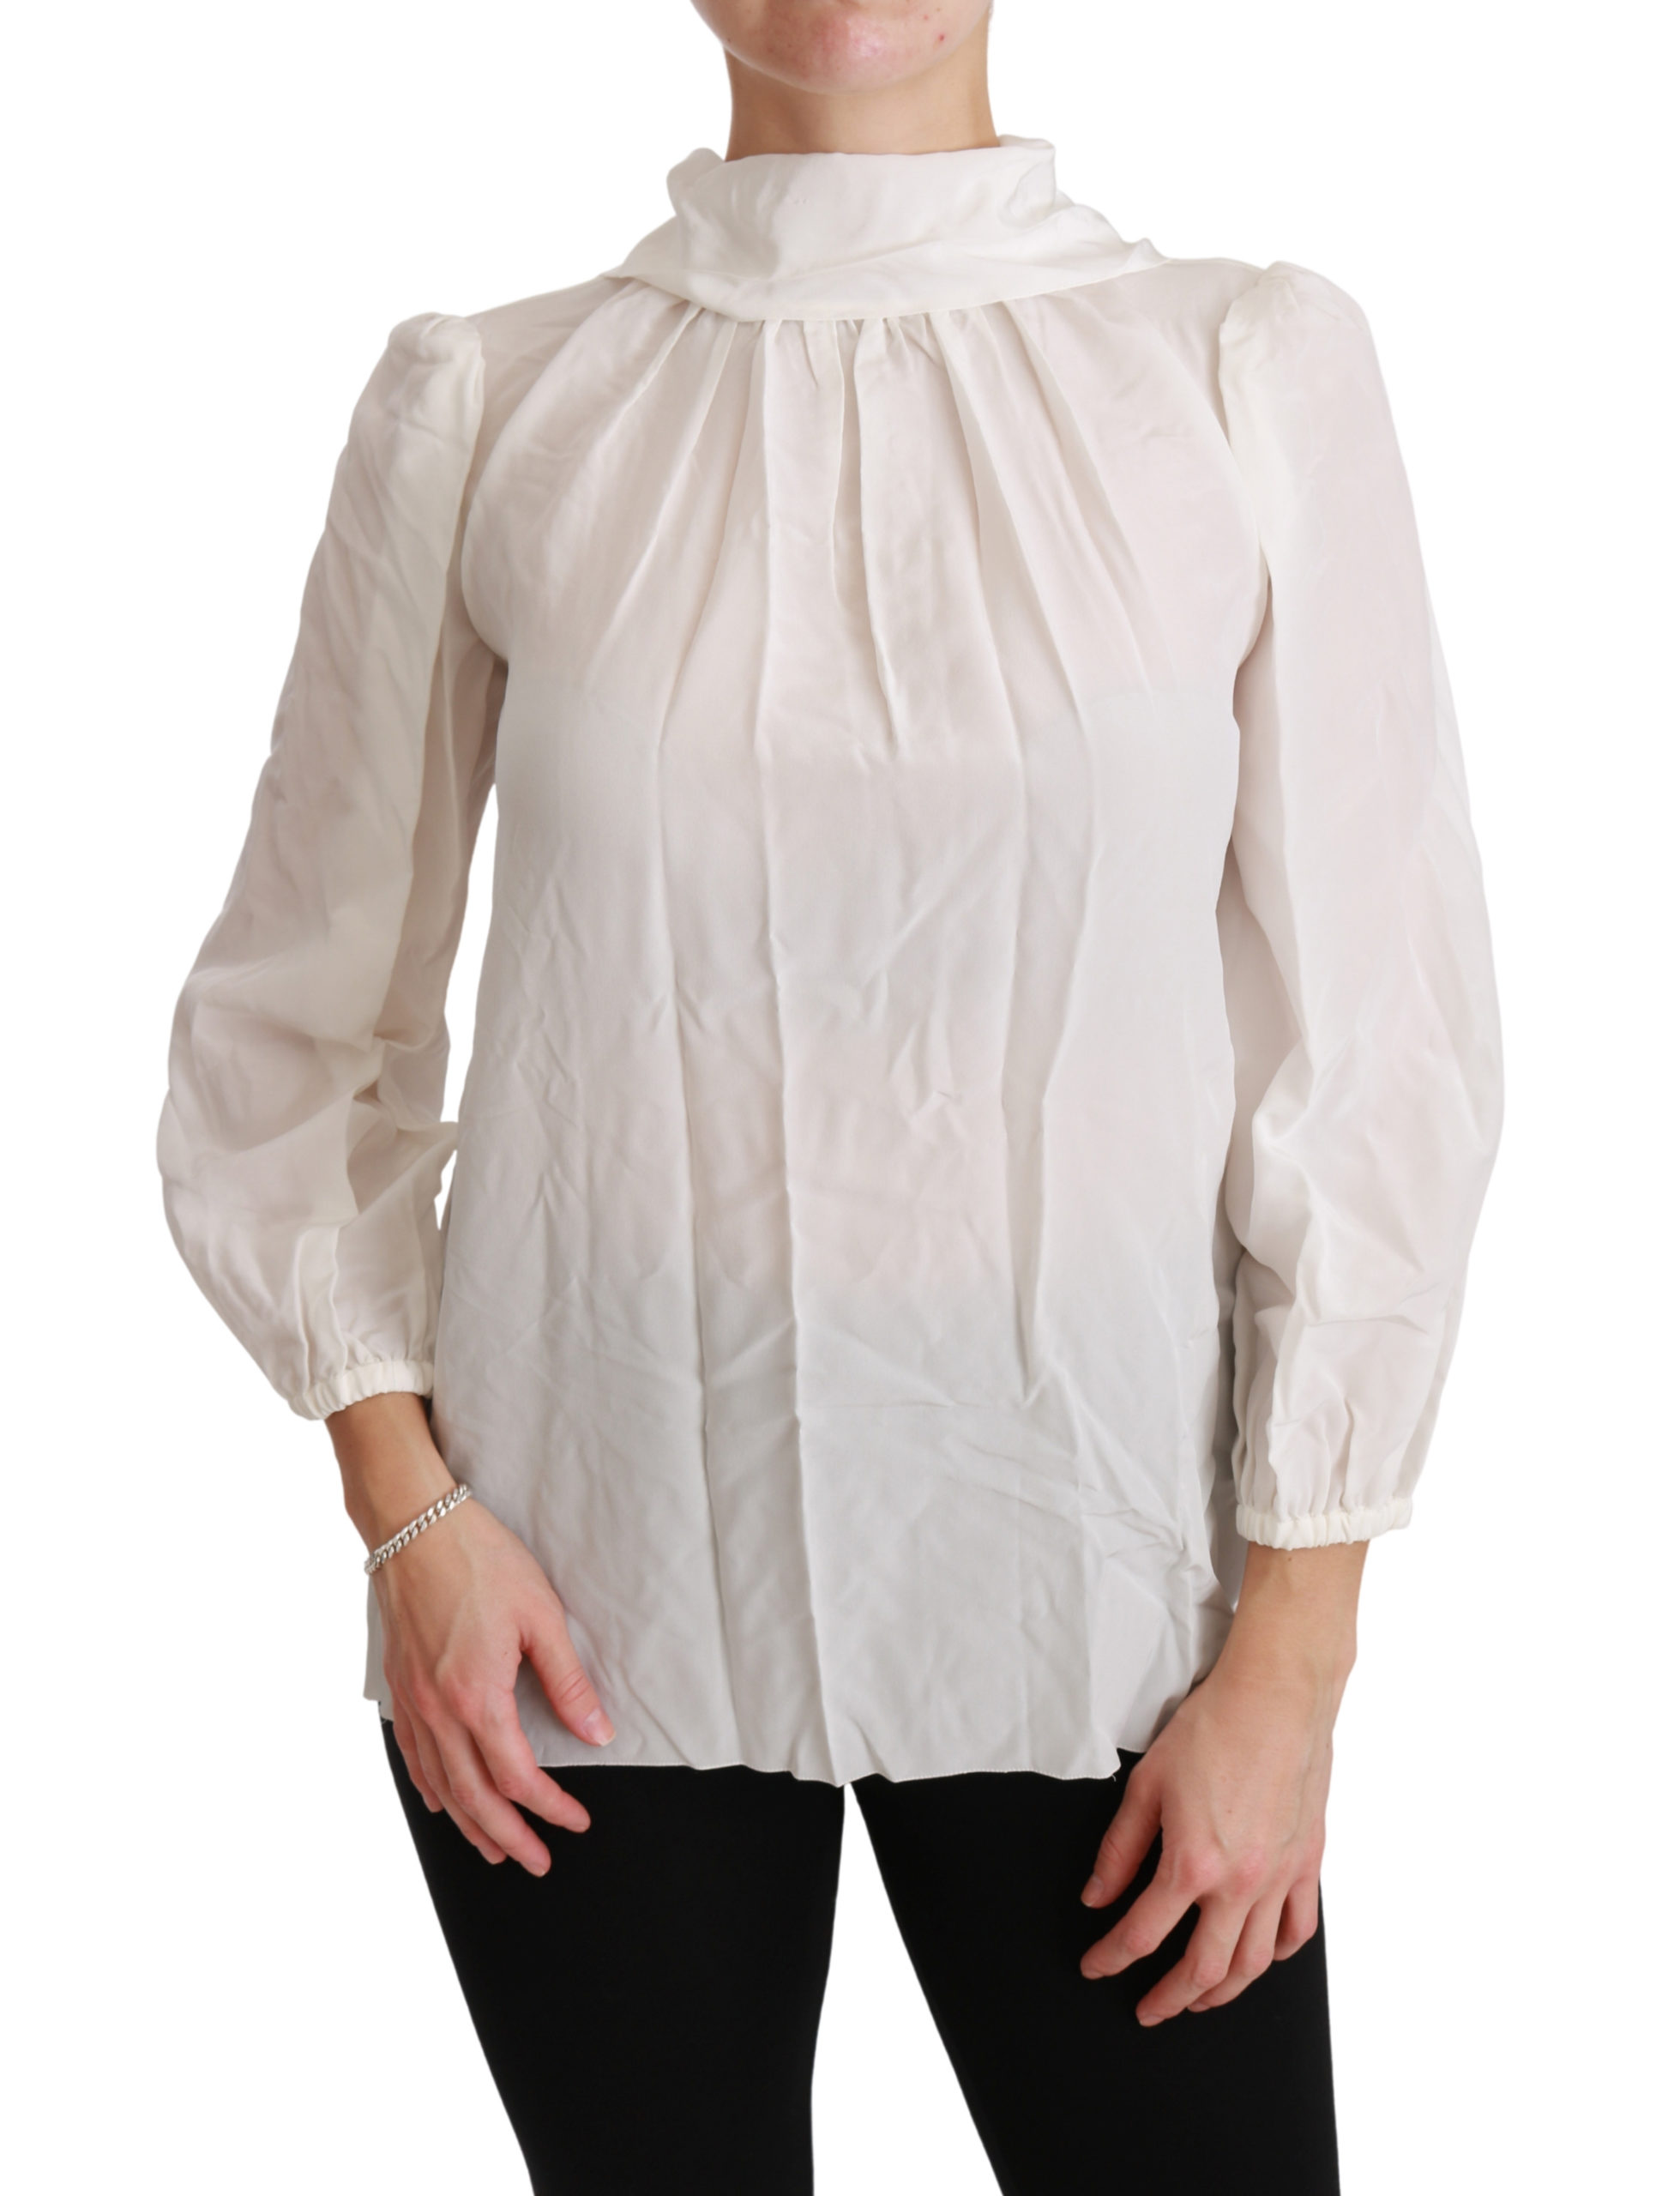 Dolce & Gabbana White Turtle Neck Blouse Shirt Silk Top • Fashion ...